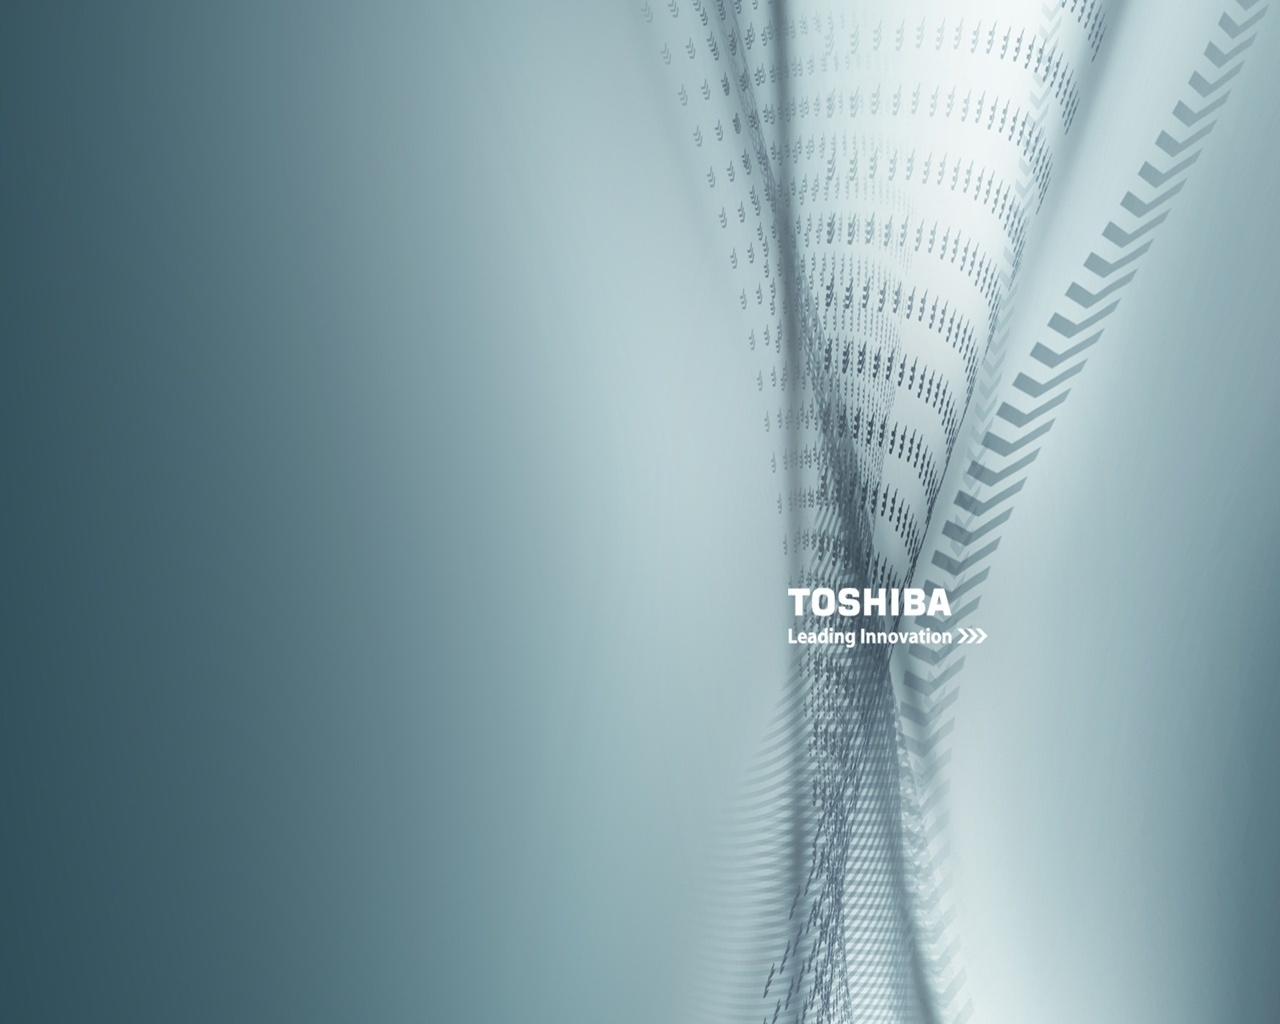 Toshiba Innovation for 1280 x 1024 resolution